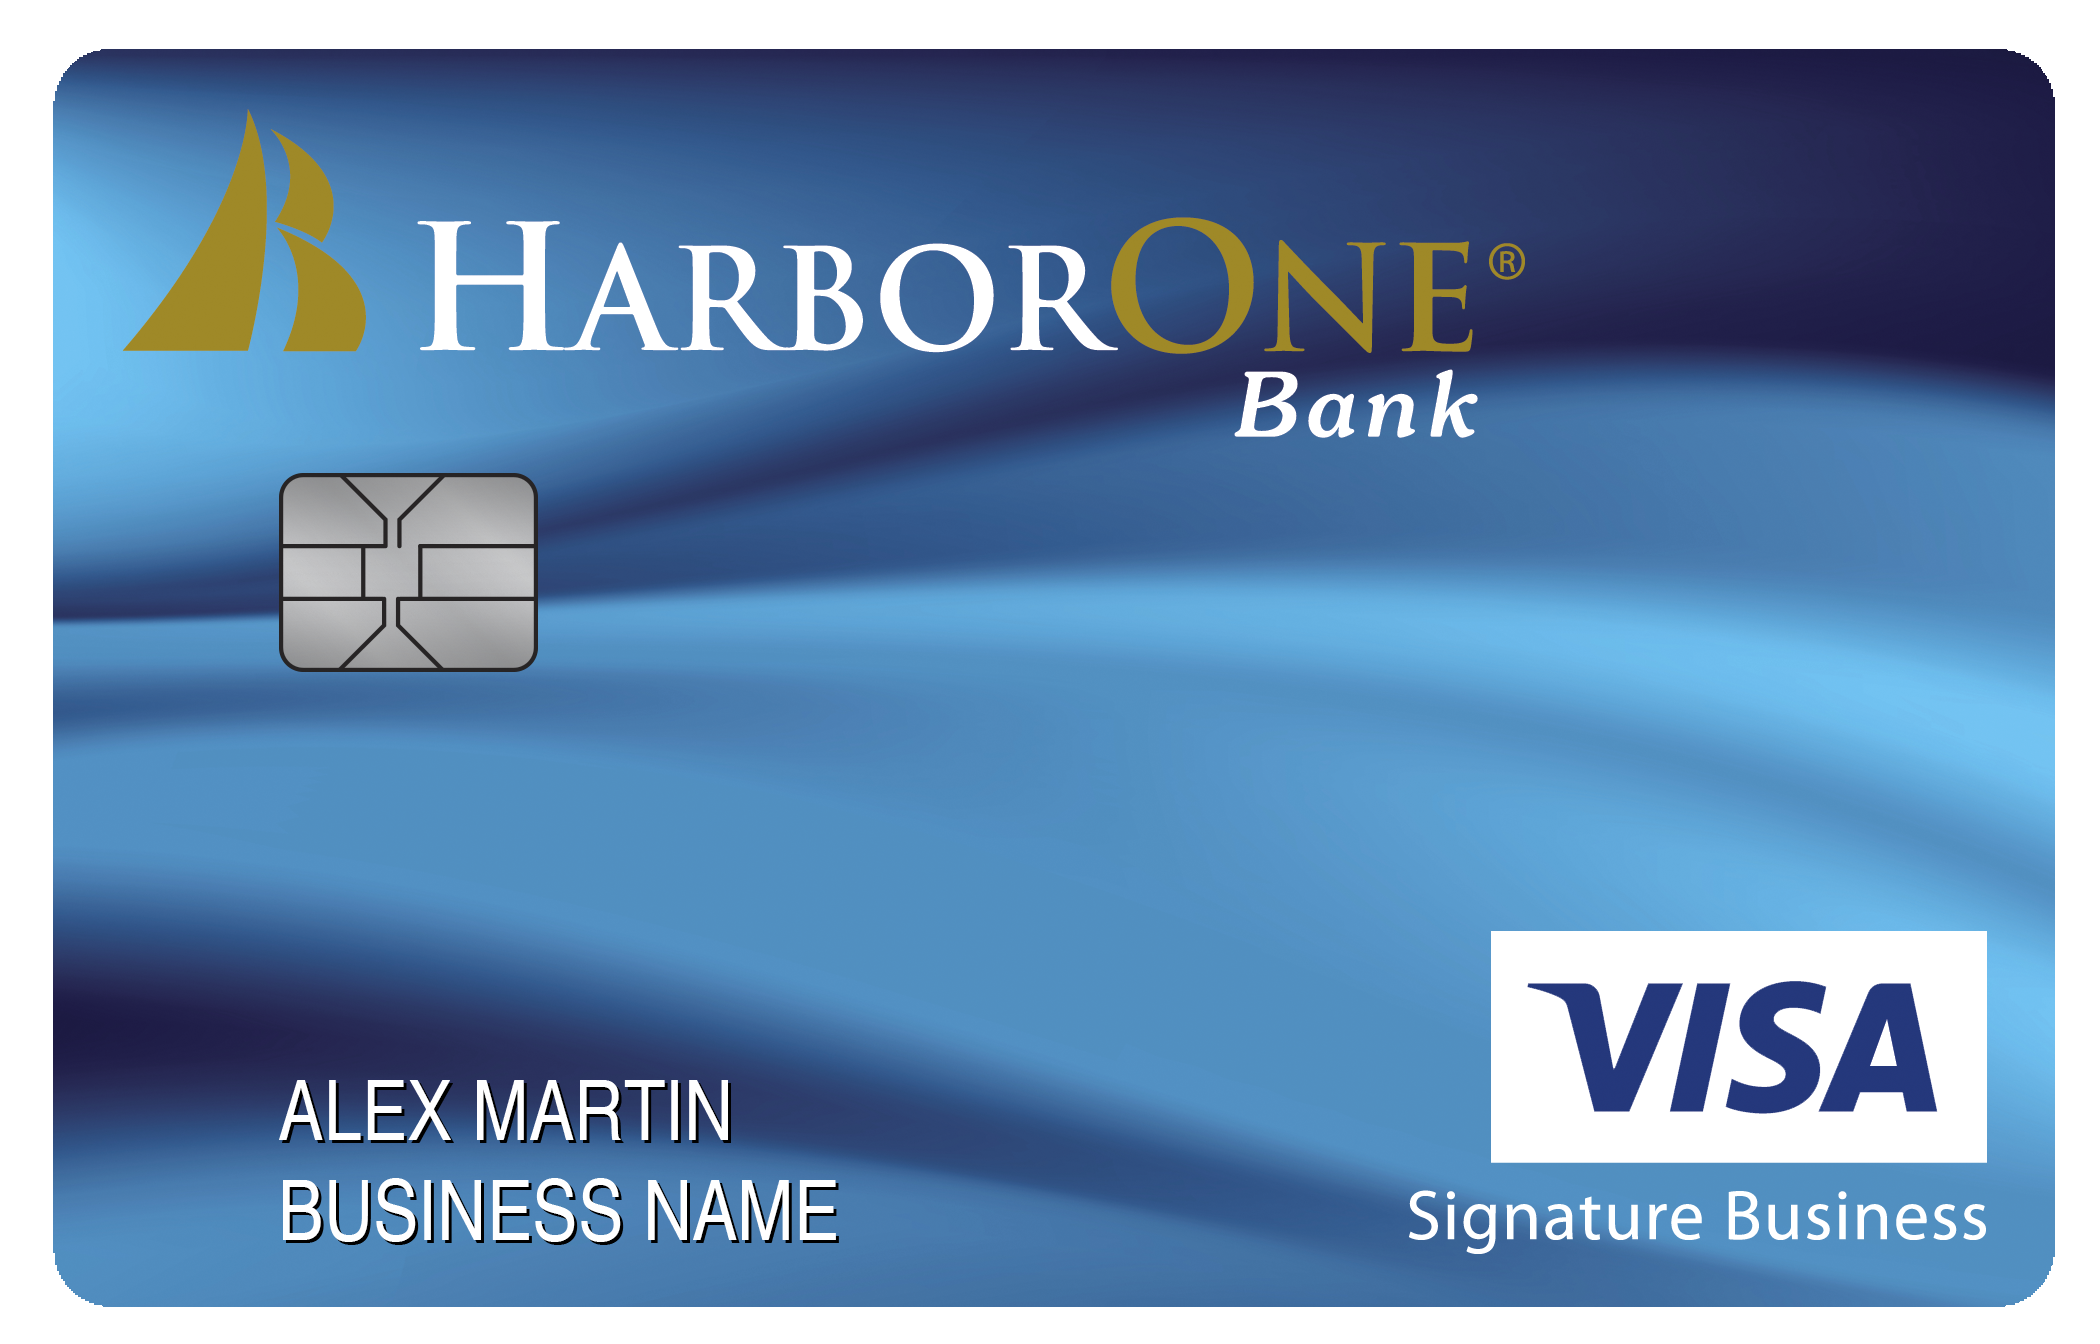 HarborOne Bank Smart Business Rewards Card